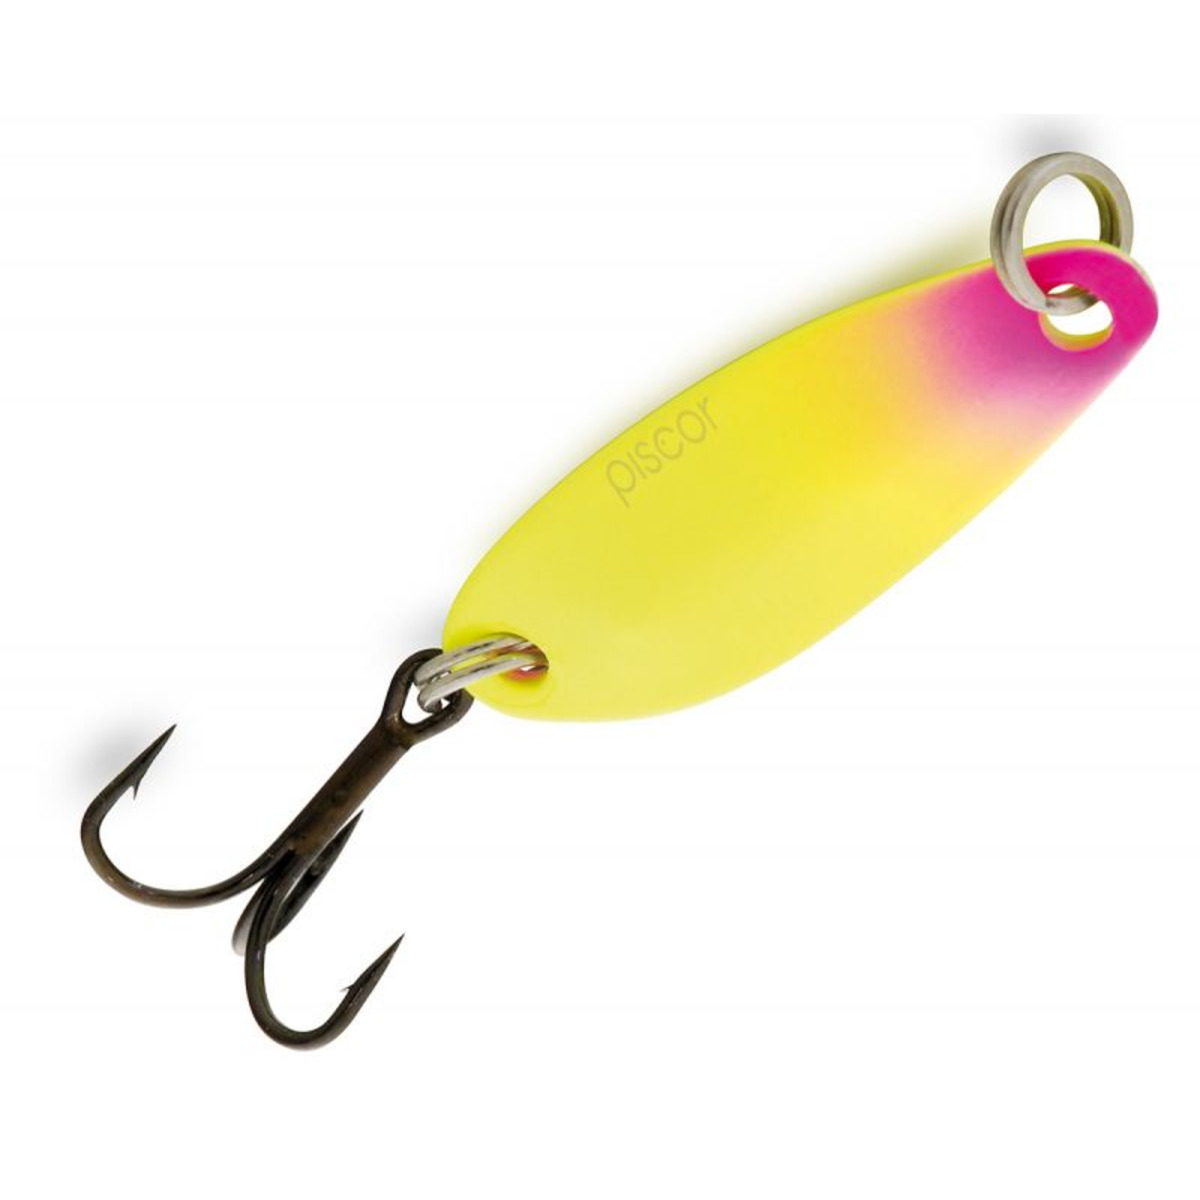 Seika Edge Spoon - 30 mm - 2.00 g - Yellow-Fluo Pink         